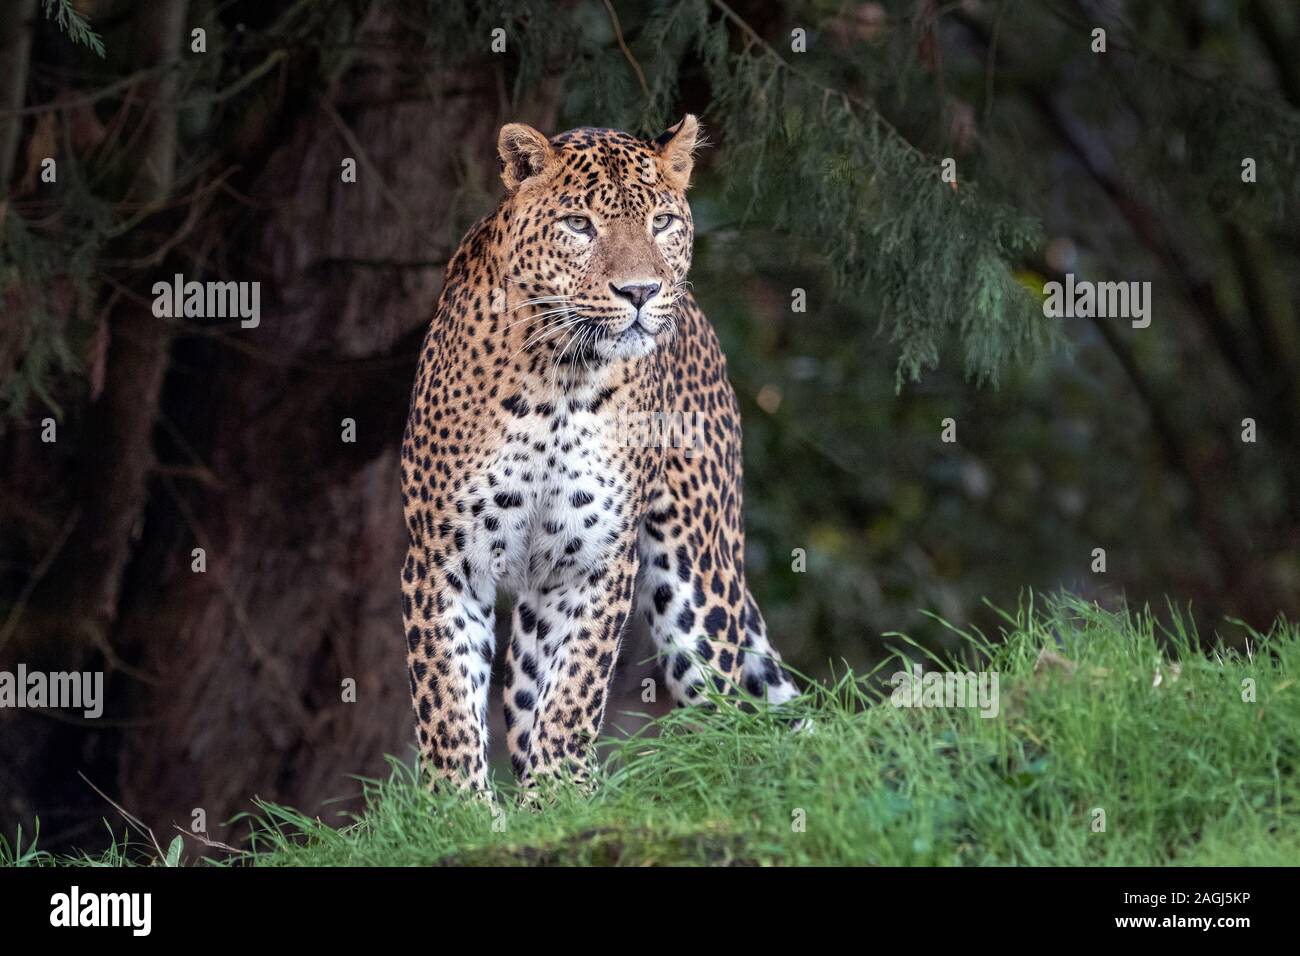 Sri Lankan leopard standing on grass Stock Photo